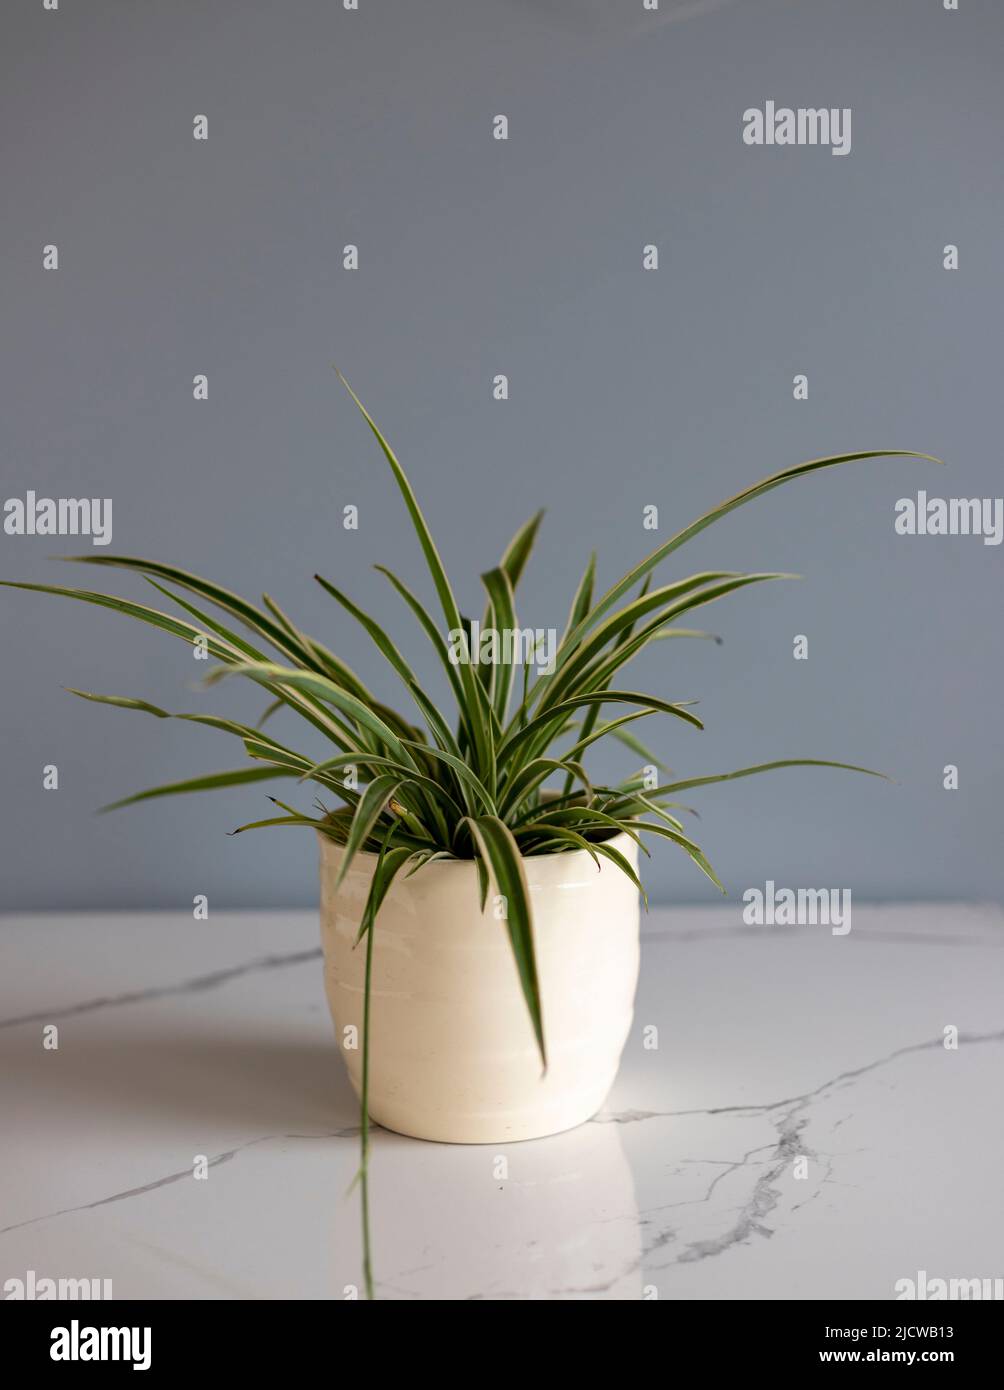 Chlorophytum comosum houseplant in a decorative pot Stock Photo